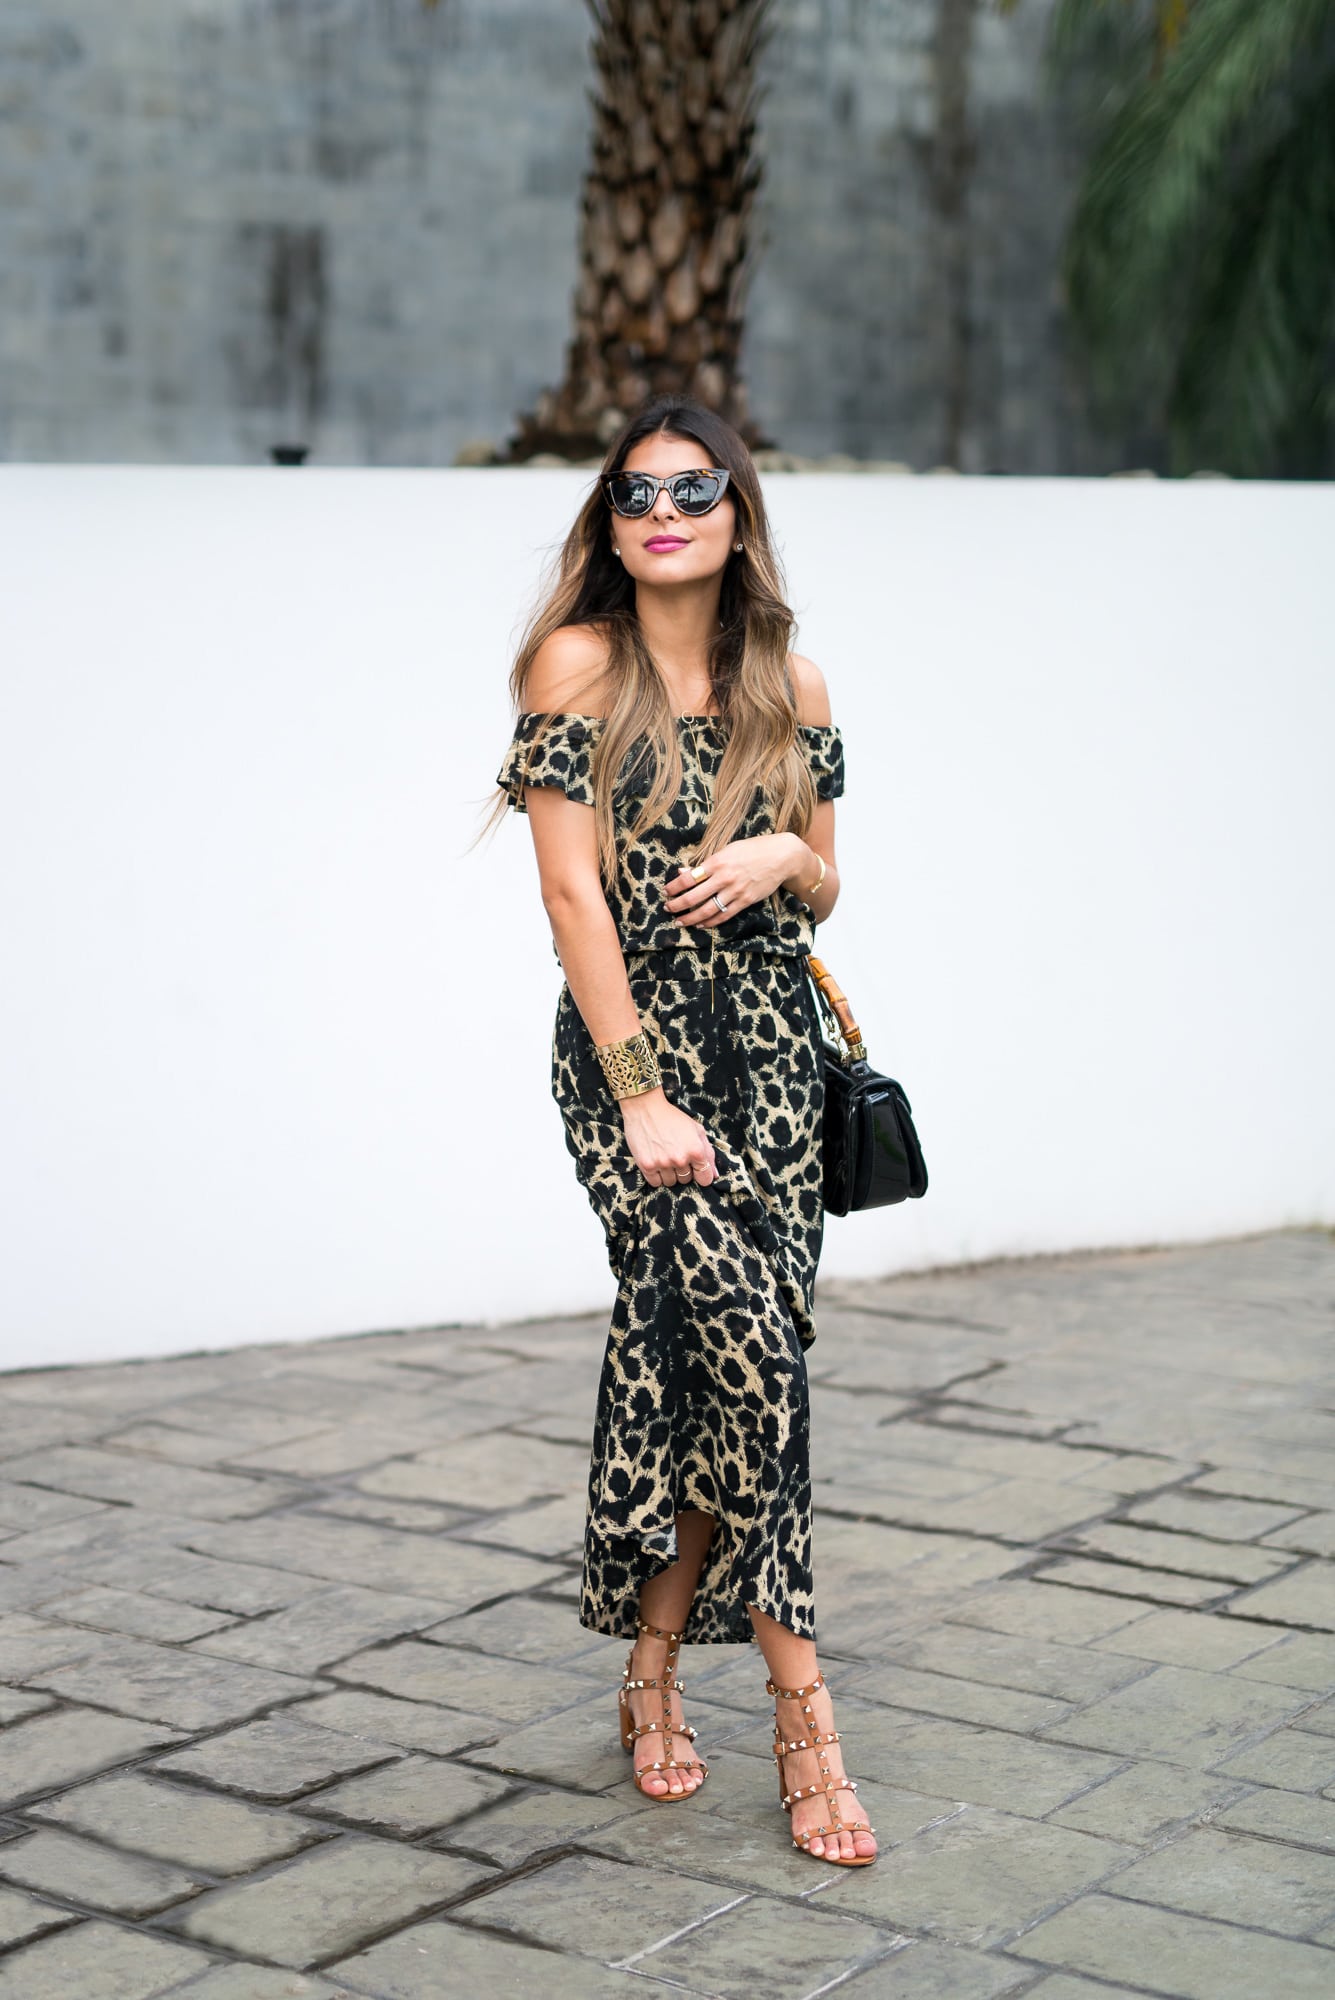 Vero Moda -Leopard -Print -Off -The- Shoulder -Maxi-Dress-Valentino-Rockstud-Sandals- Gucci-Bamboo Bag - Pam- Hetlinger- The- Girl - From- Panama